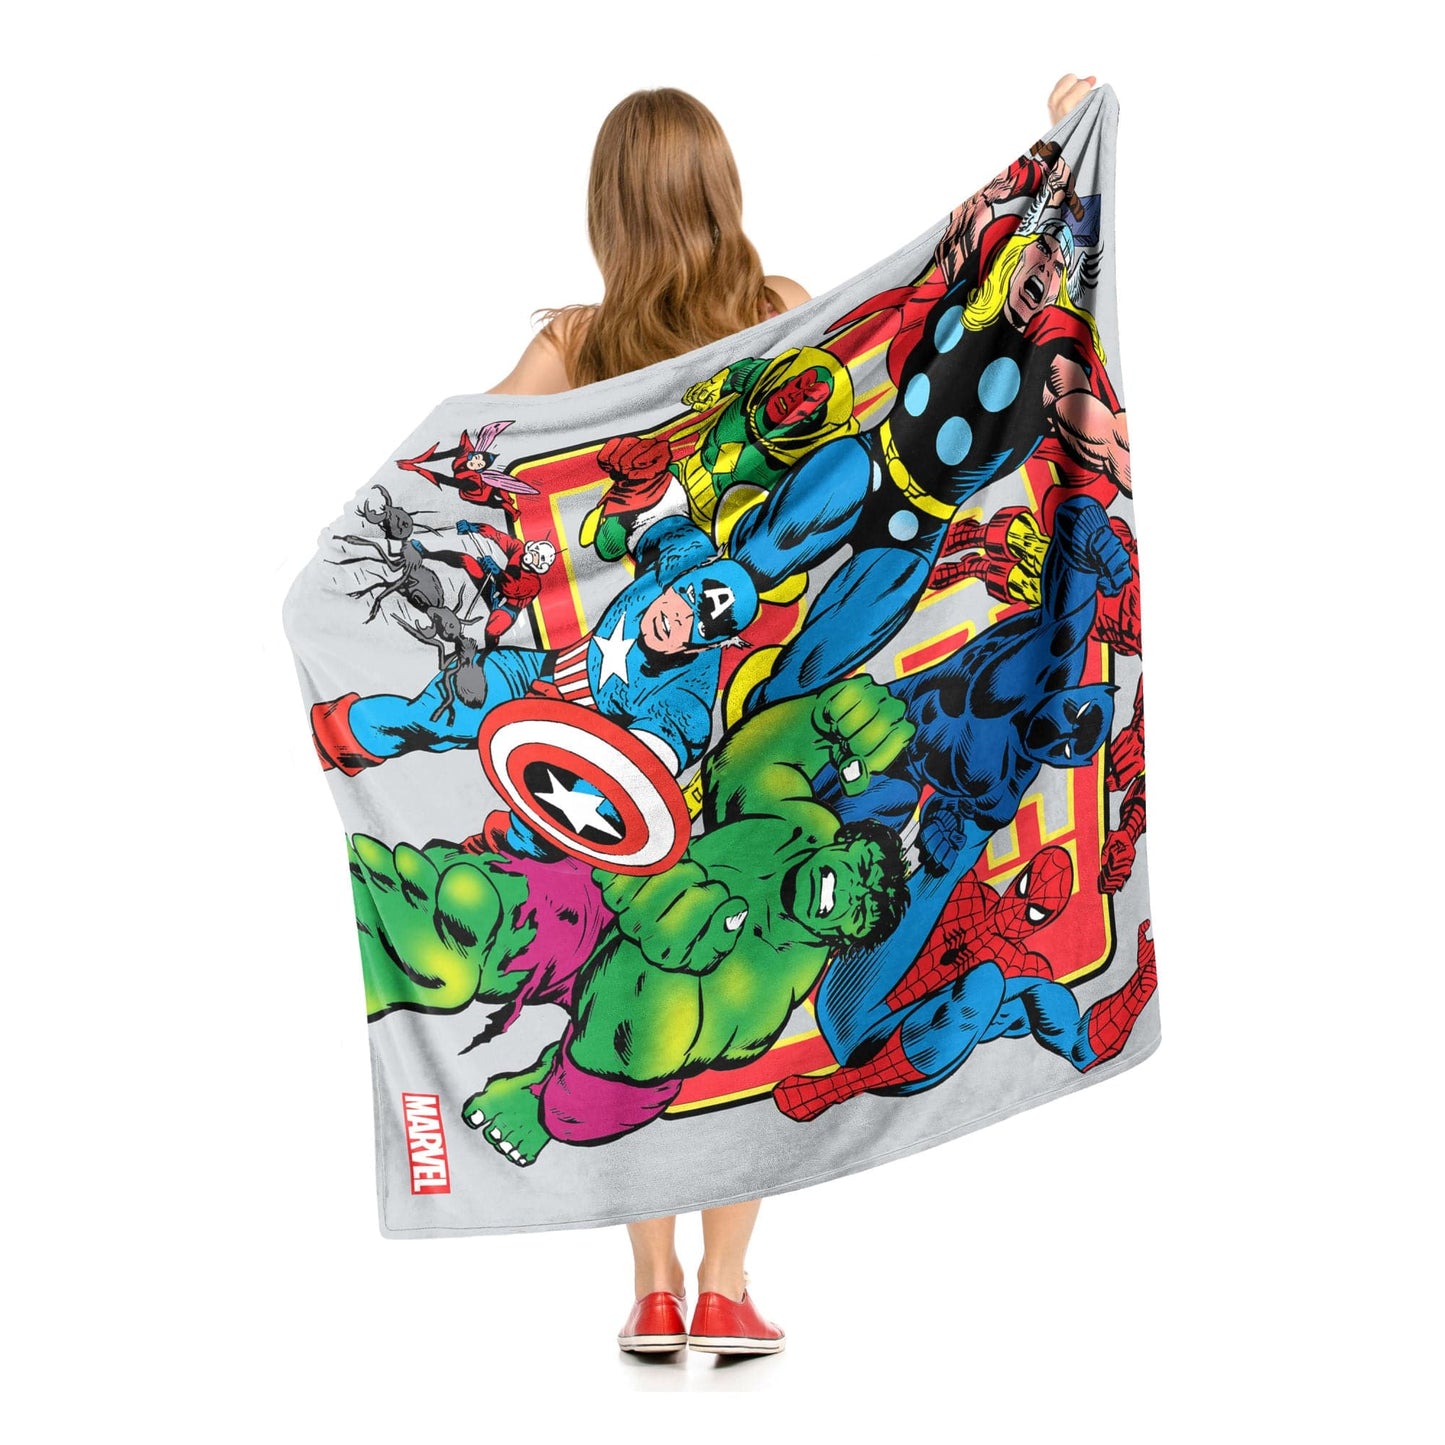 Marvel Comics; Comic Run Aggretsuko Comics Silk Touch Throw Blanket; 50" x 60"